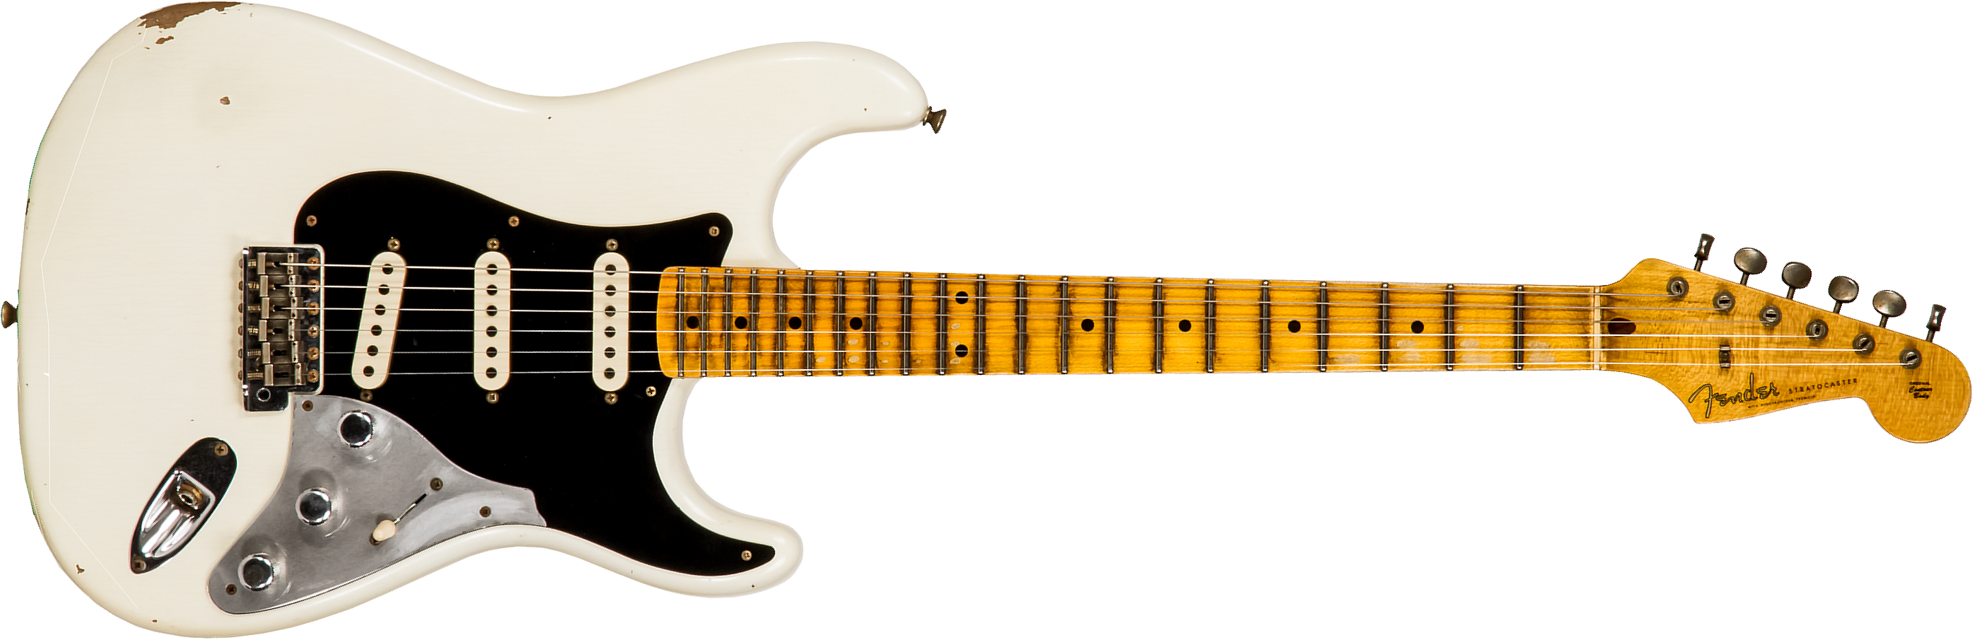 Fender Custom Shop Strat Poblano Ii 3s Trem Mn #cz555378 - Relic Olympic White - E-Gitarre in Str-Form - Main picture